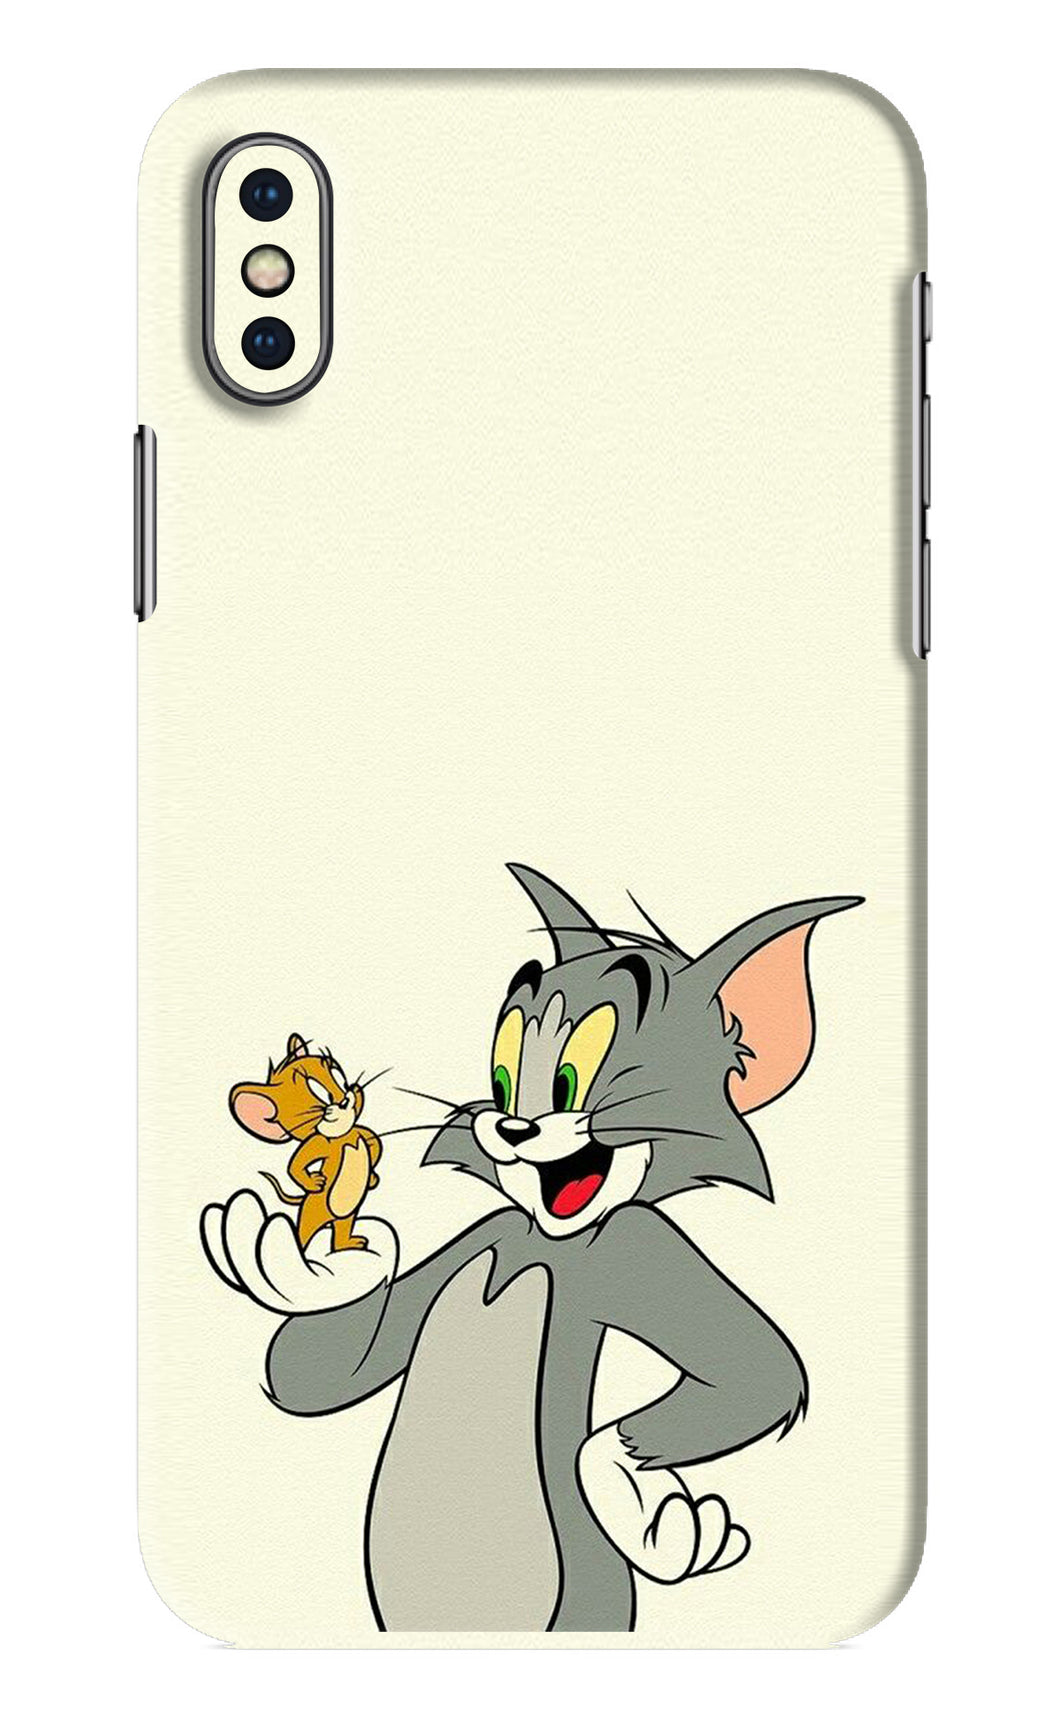 Tom & Jerry iPhone XS Back Skin Wrap